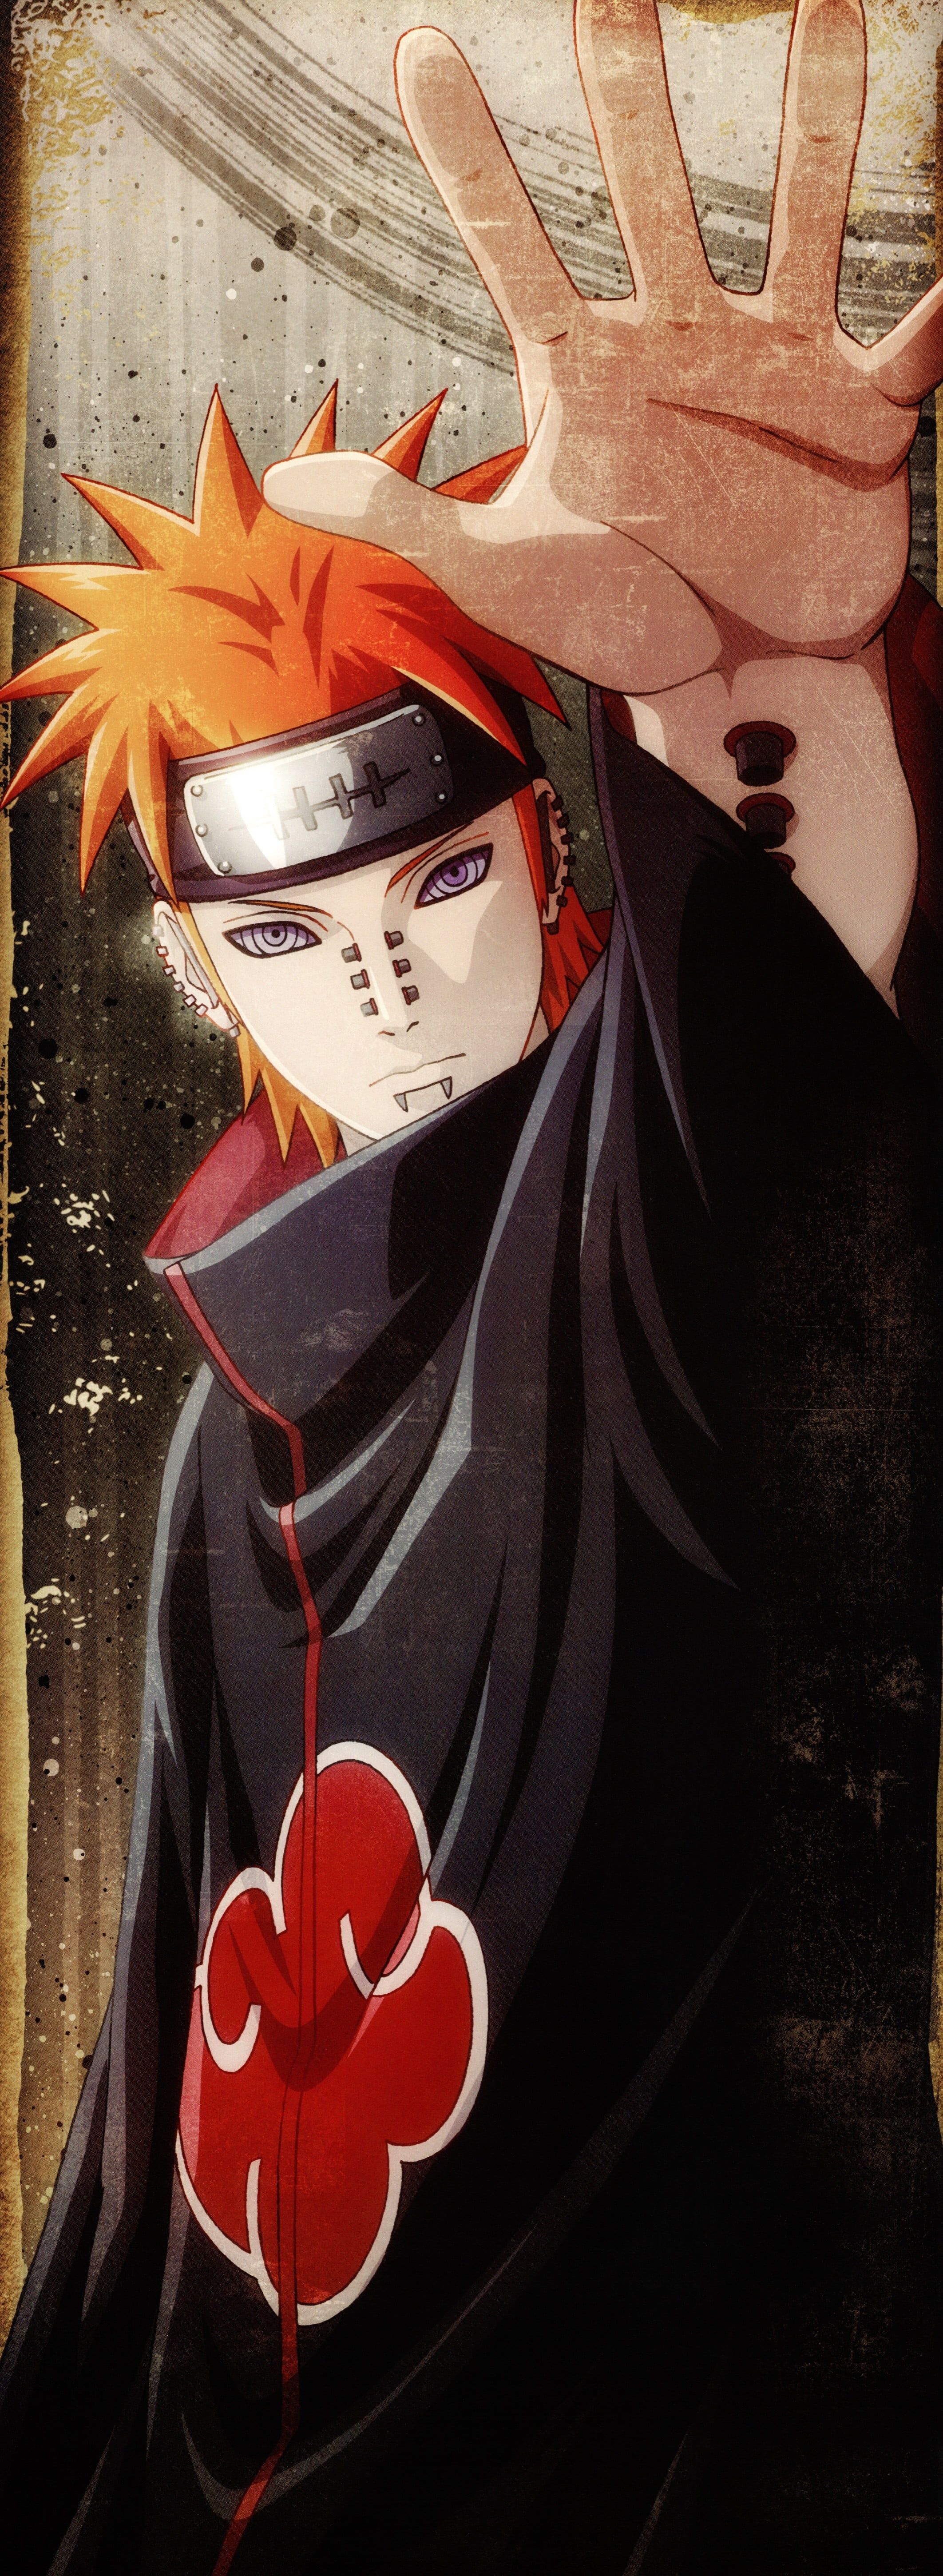 Pain Naruto iPhone Wallpaper On